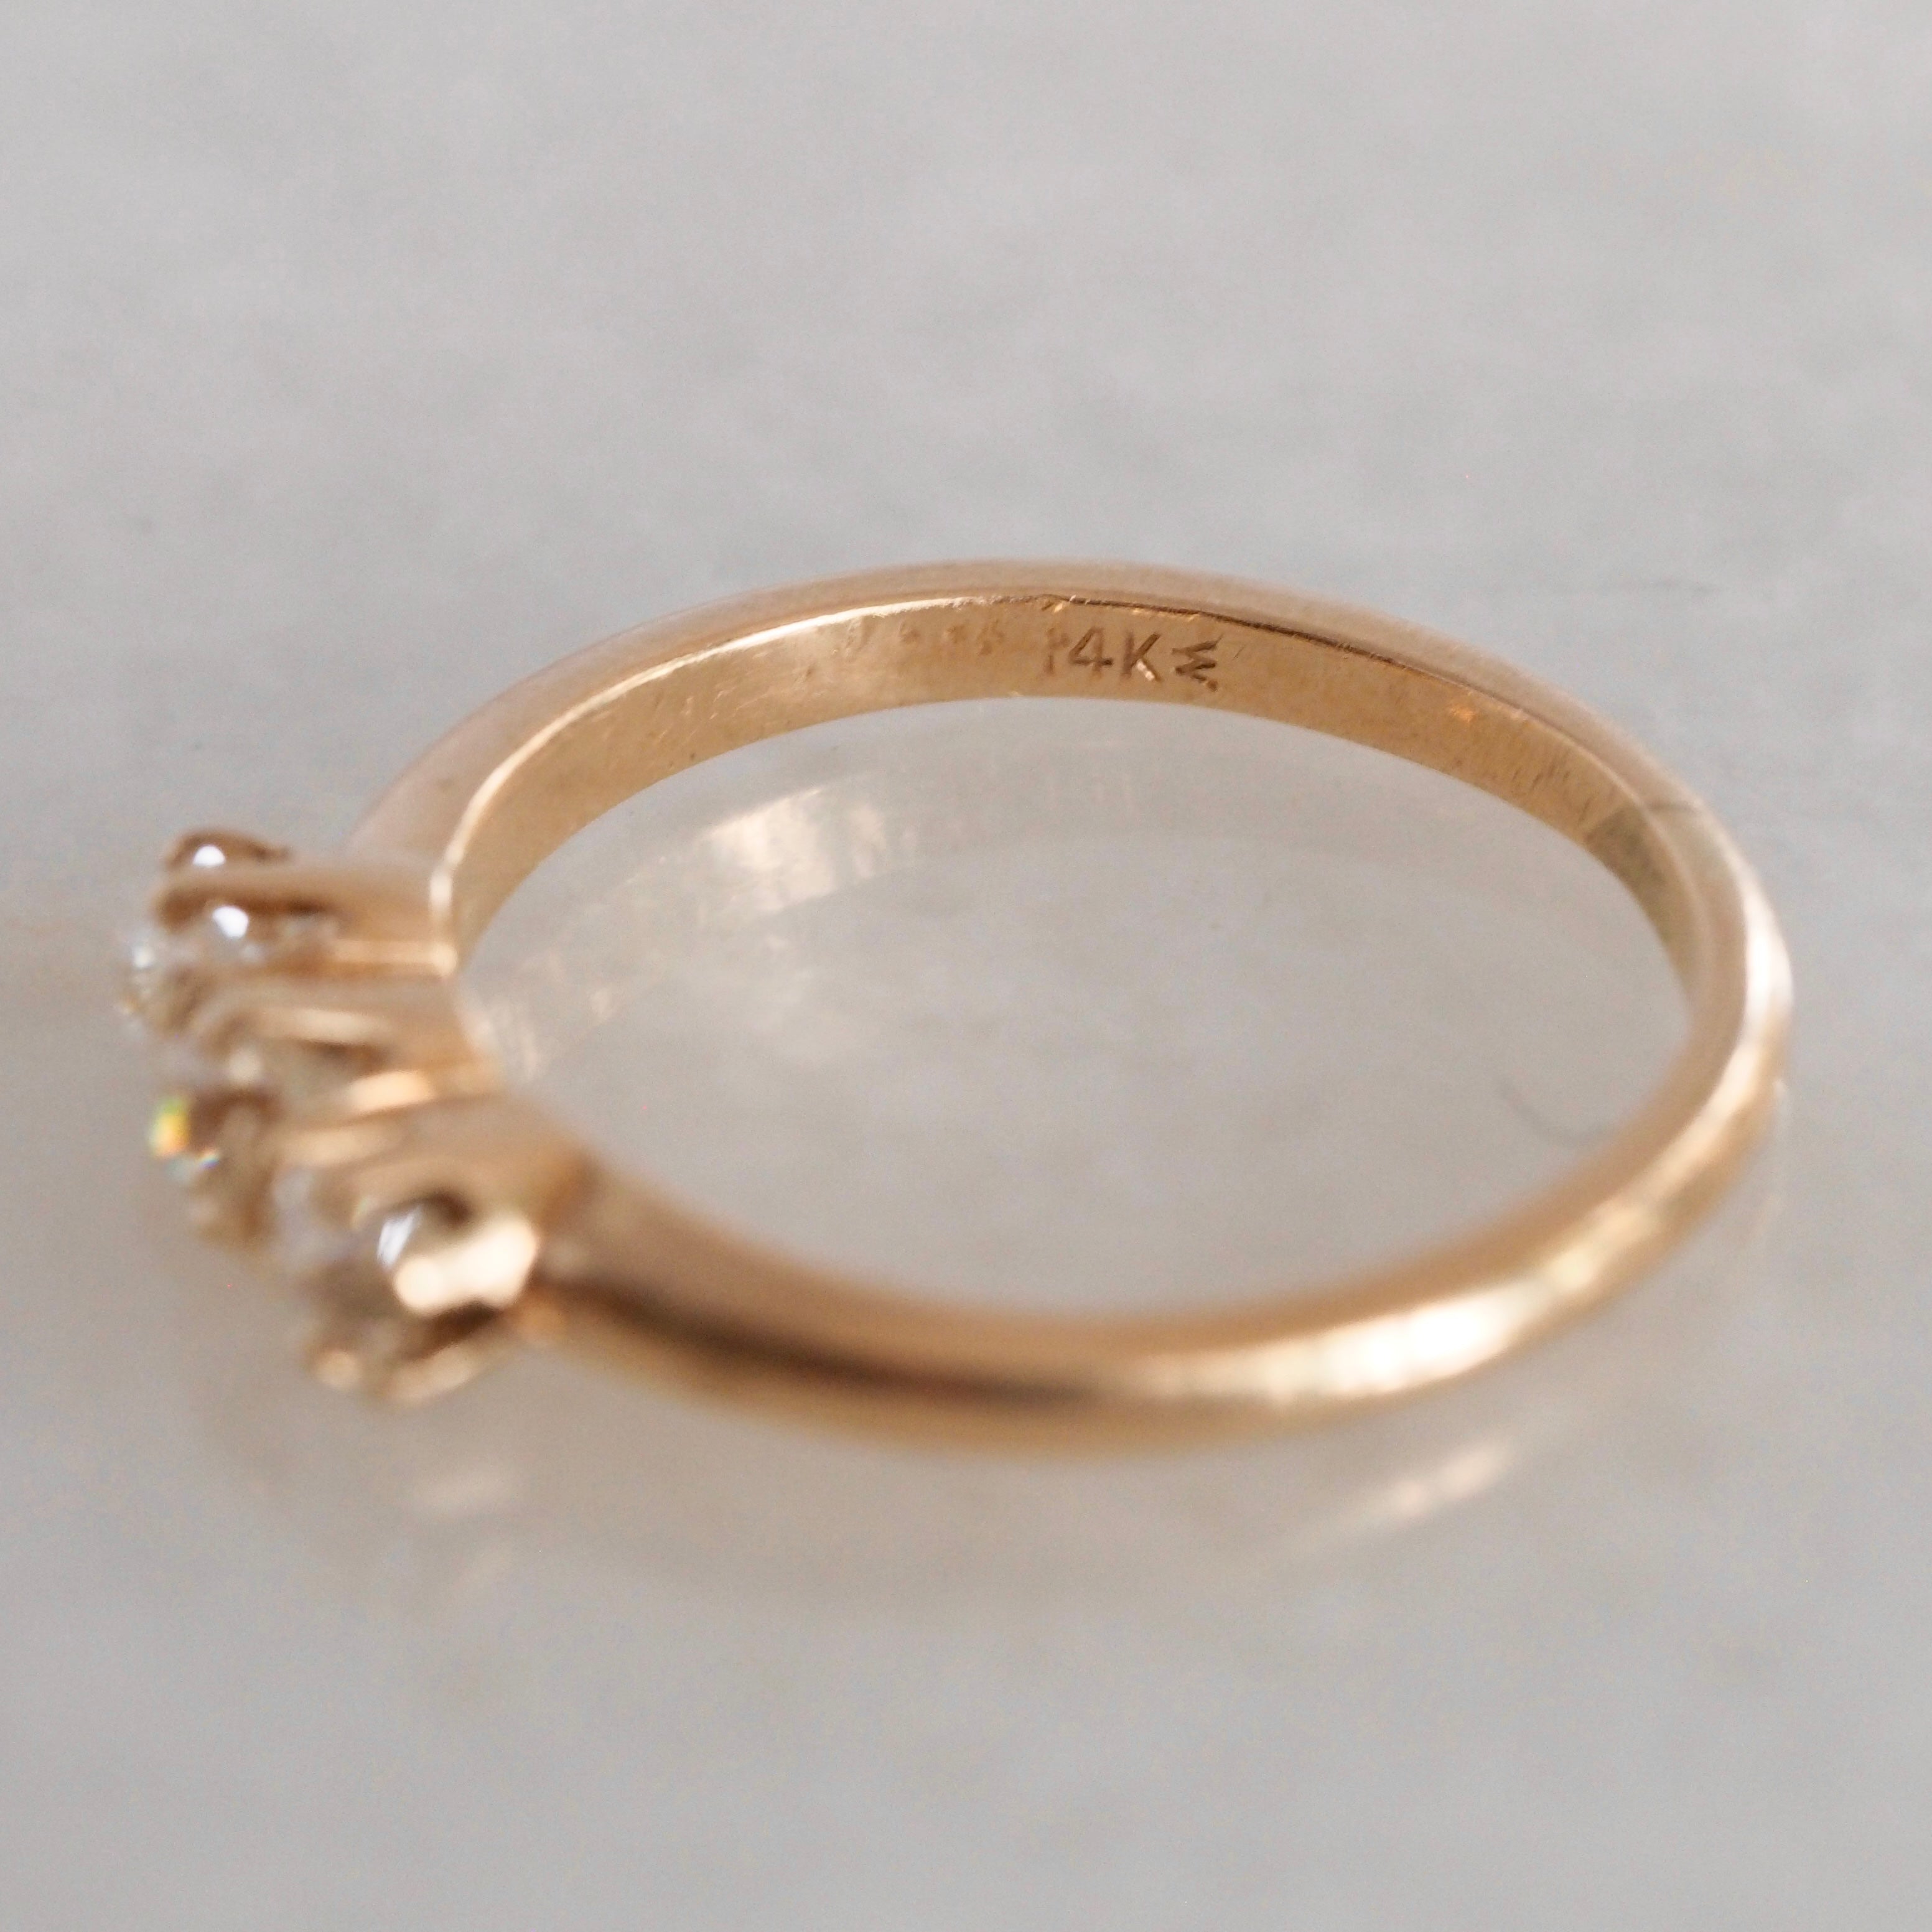 Antique 14k Gold Old Mine Cut Diamond Trilogy Engagement Ring